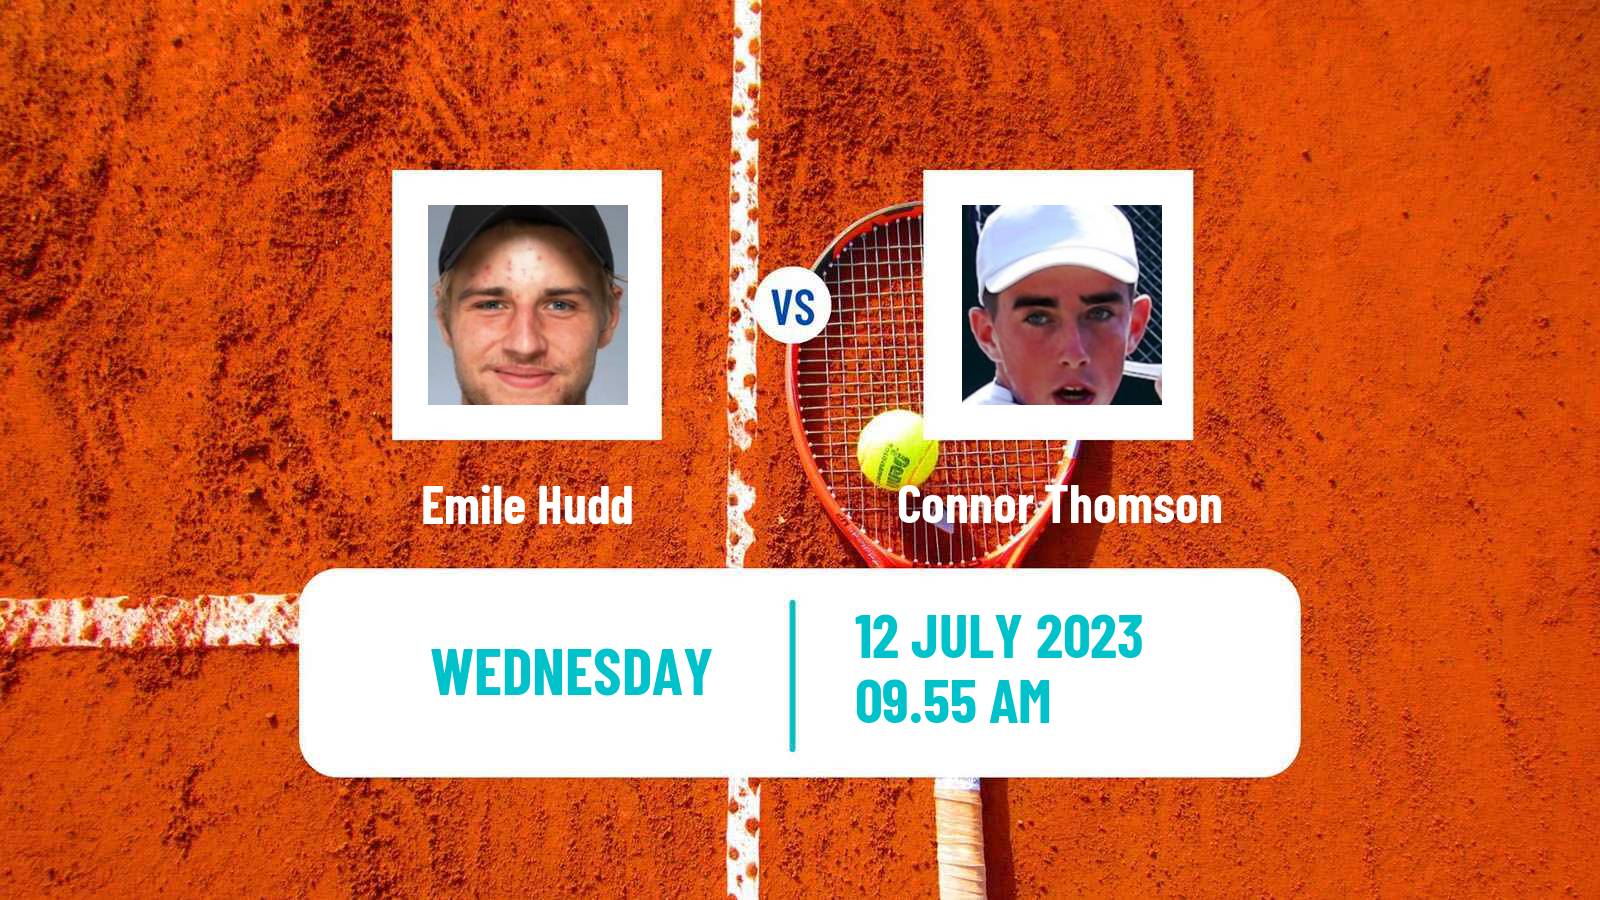 Tennis ITF M25 Nottingham 4 Men Emile Hudd - Connor Thomson